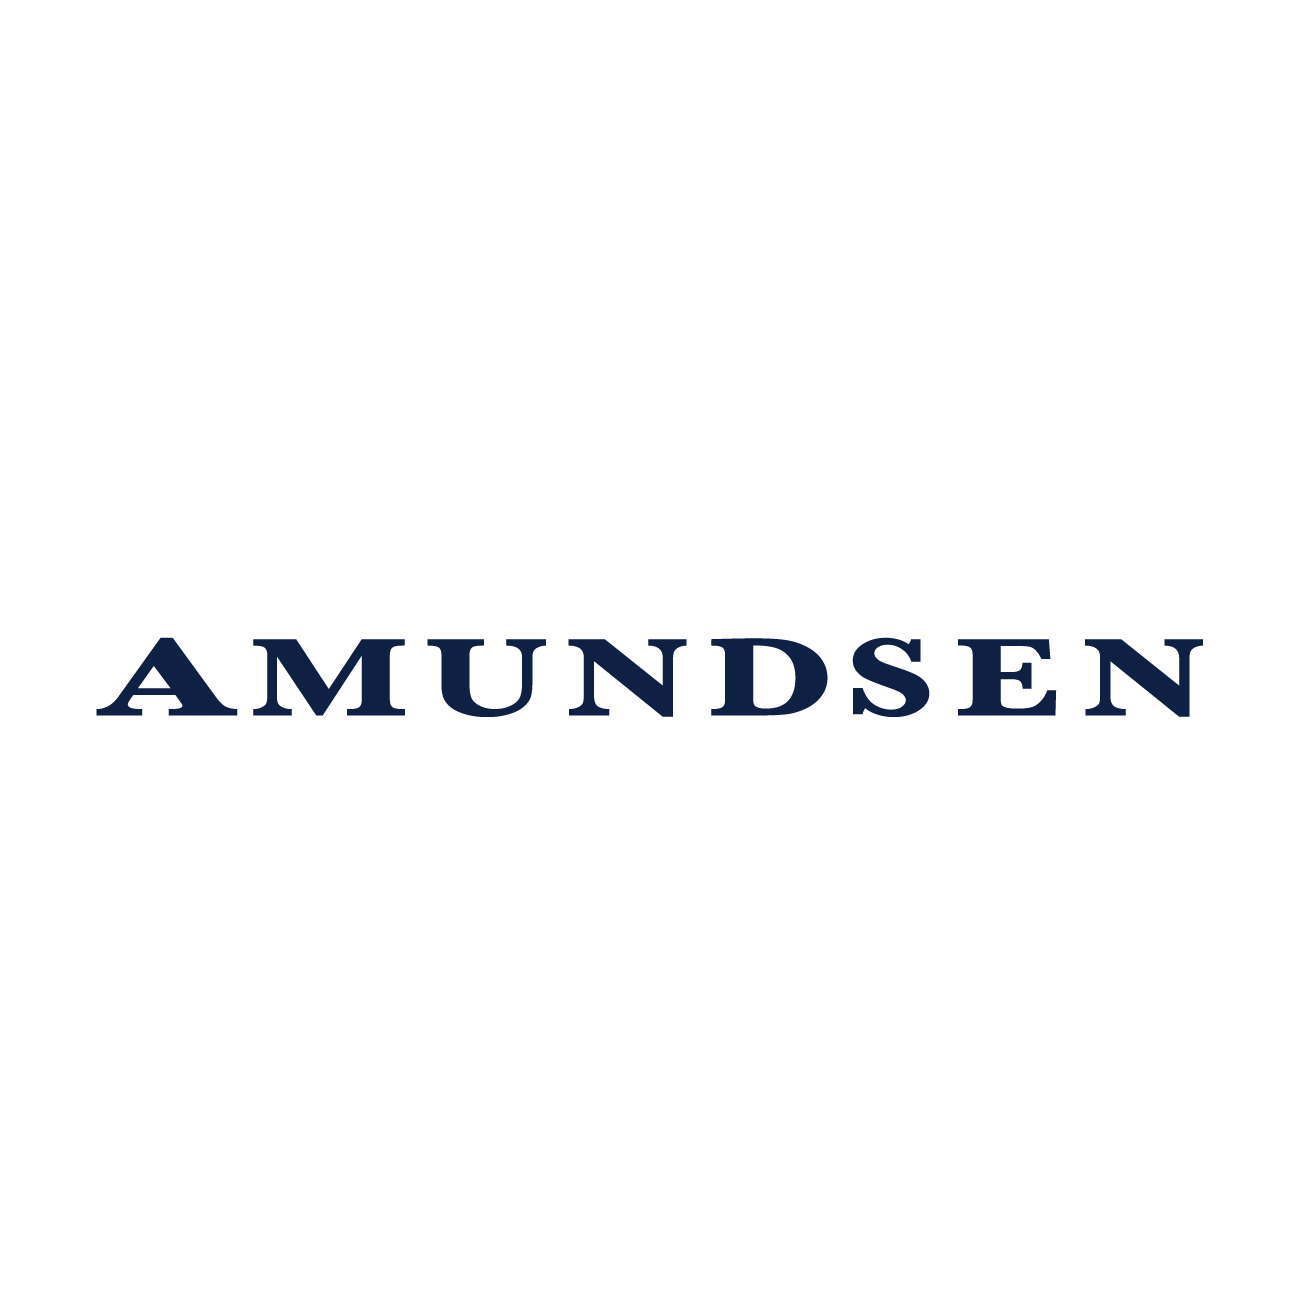 AmundsenText.png